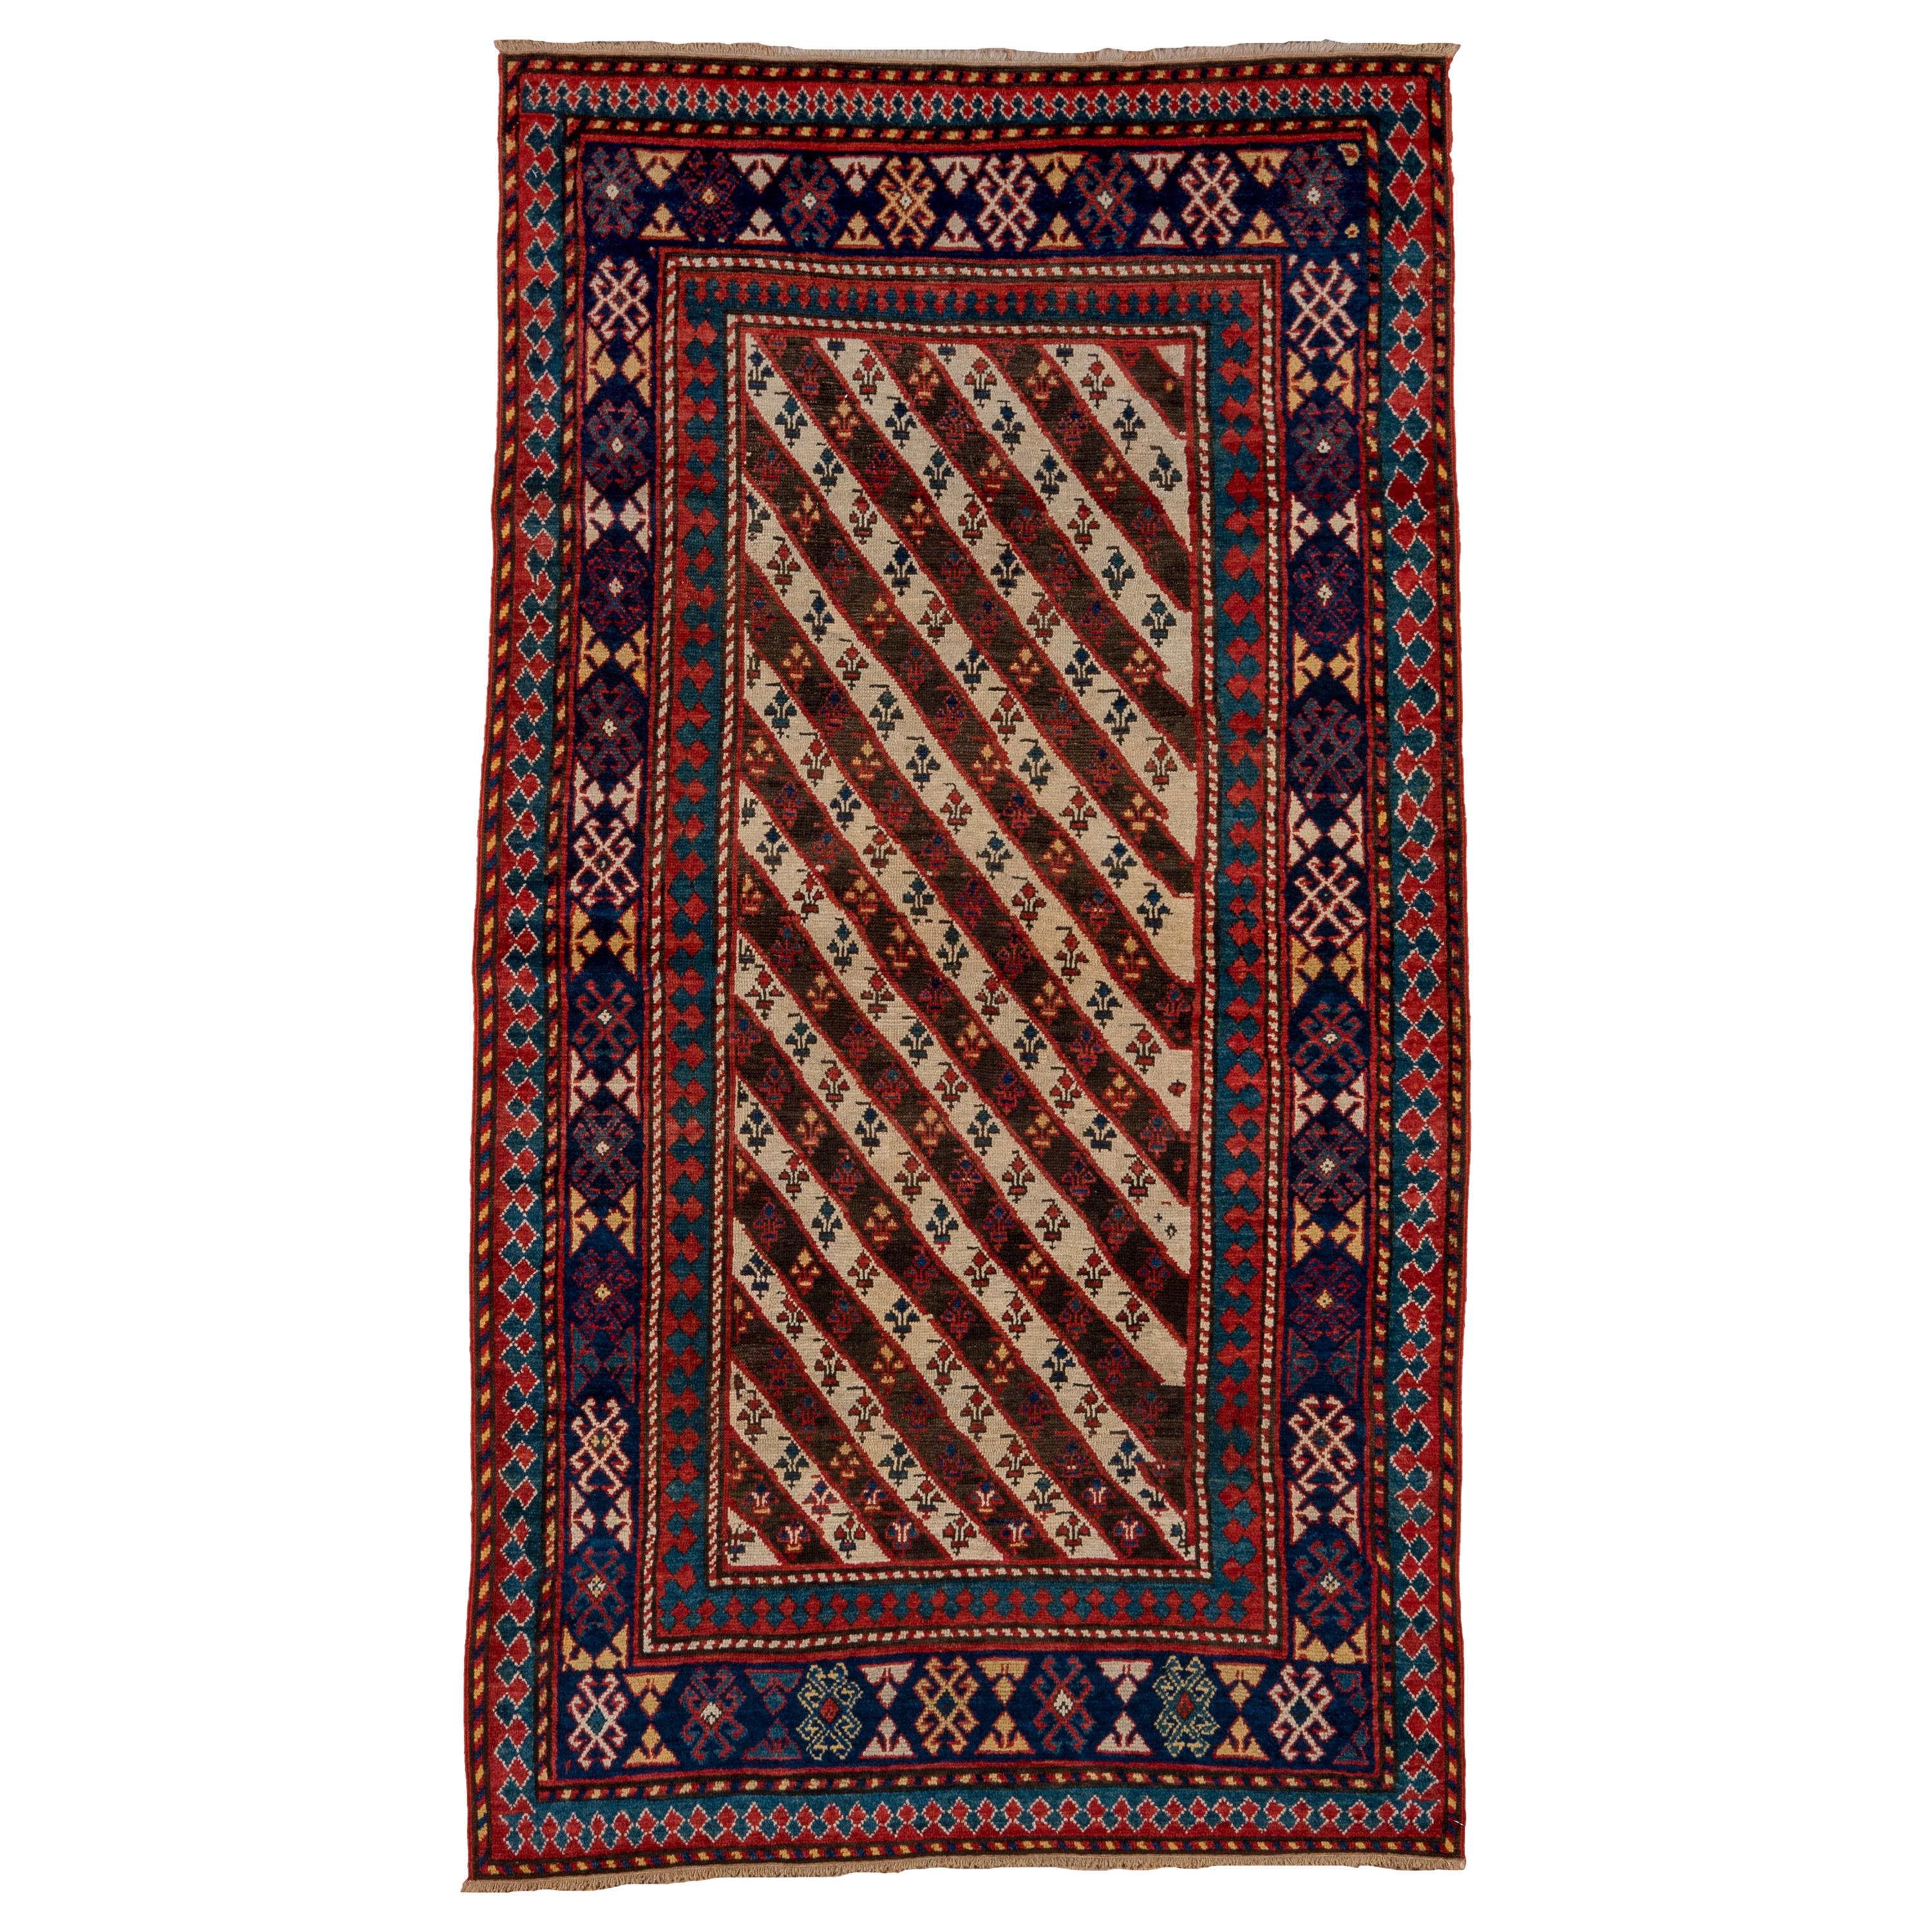 Late 19th Century Caucasian Kazak Rug, Diagonal Stripe Design, circa 1890s